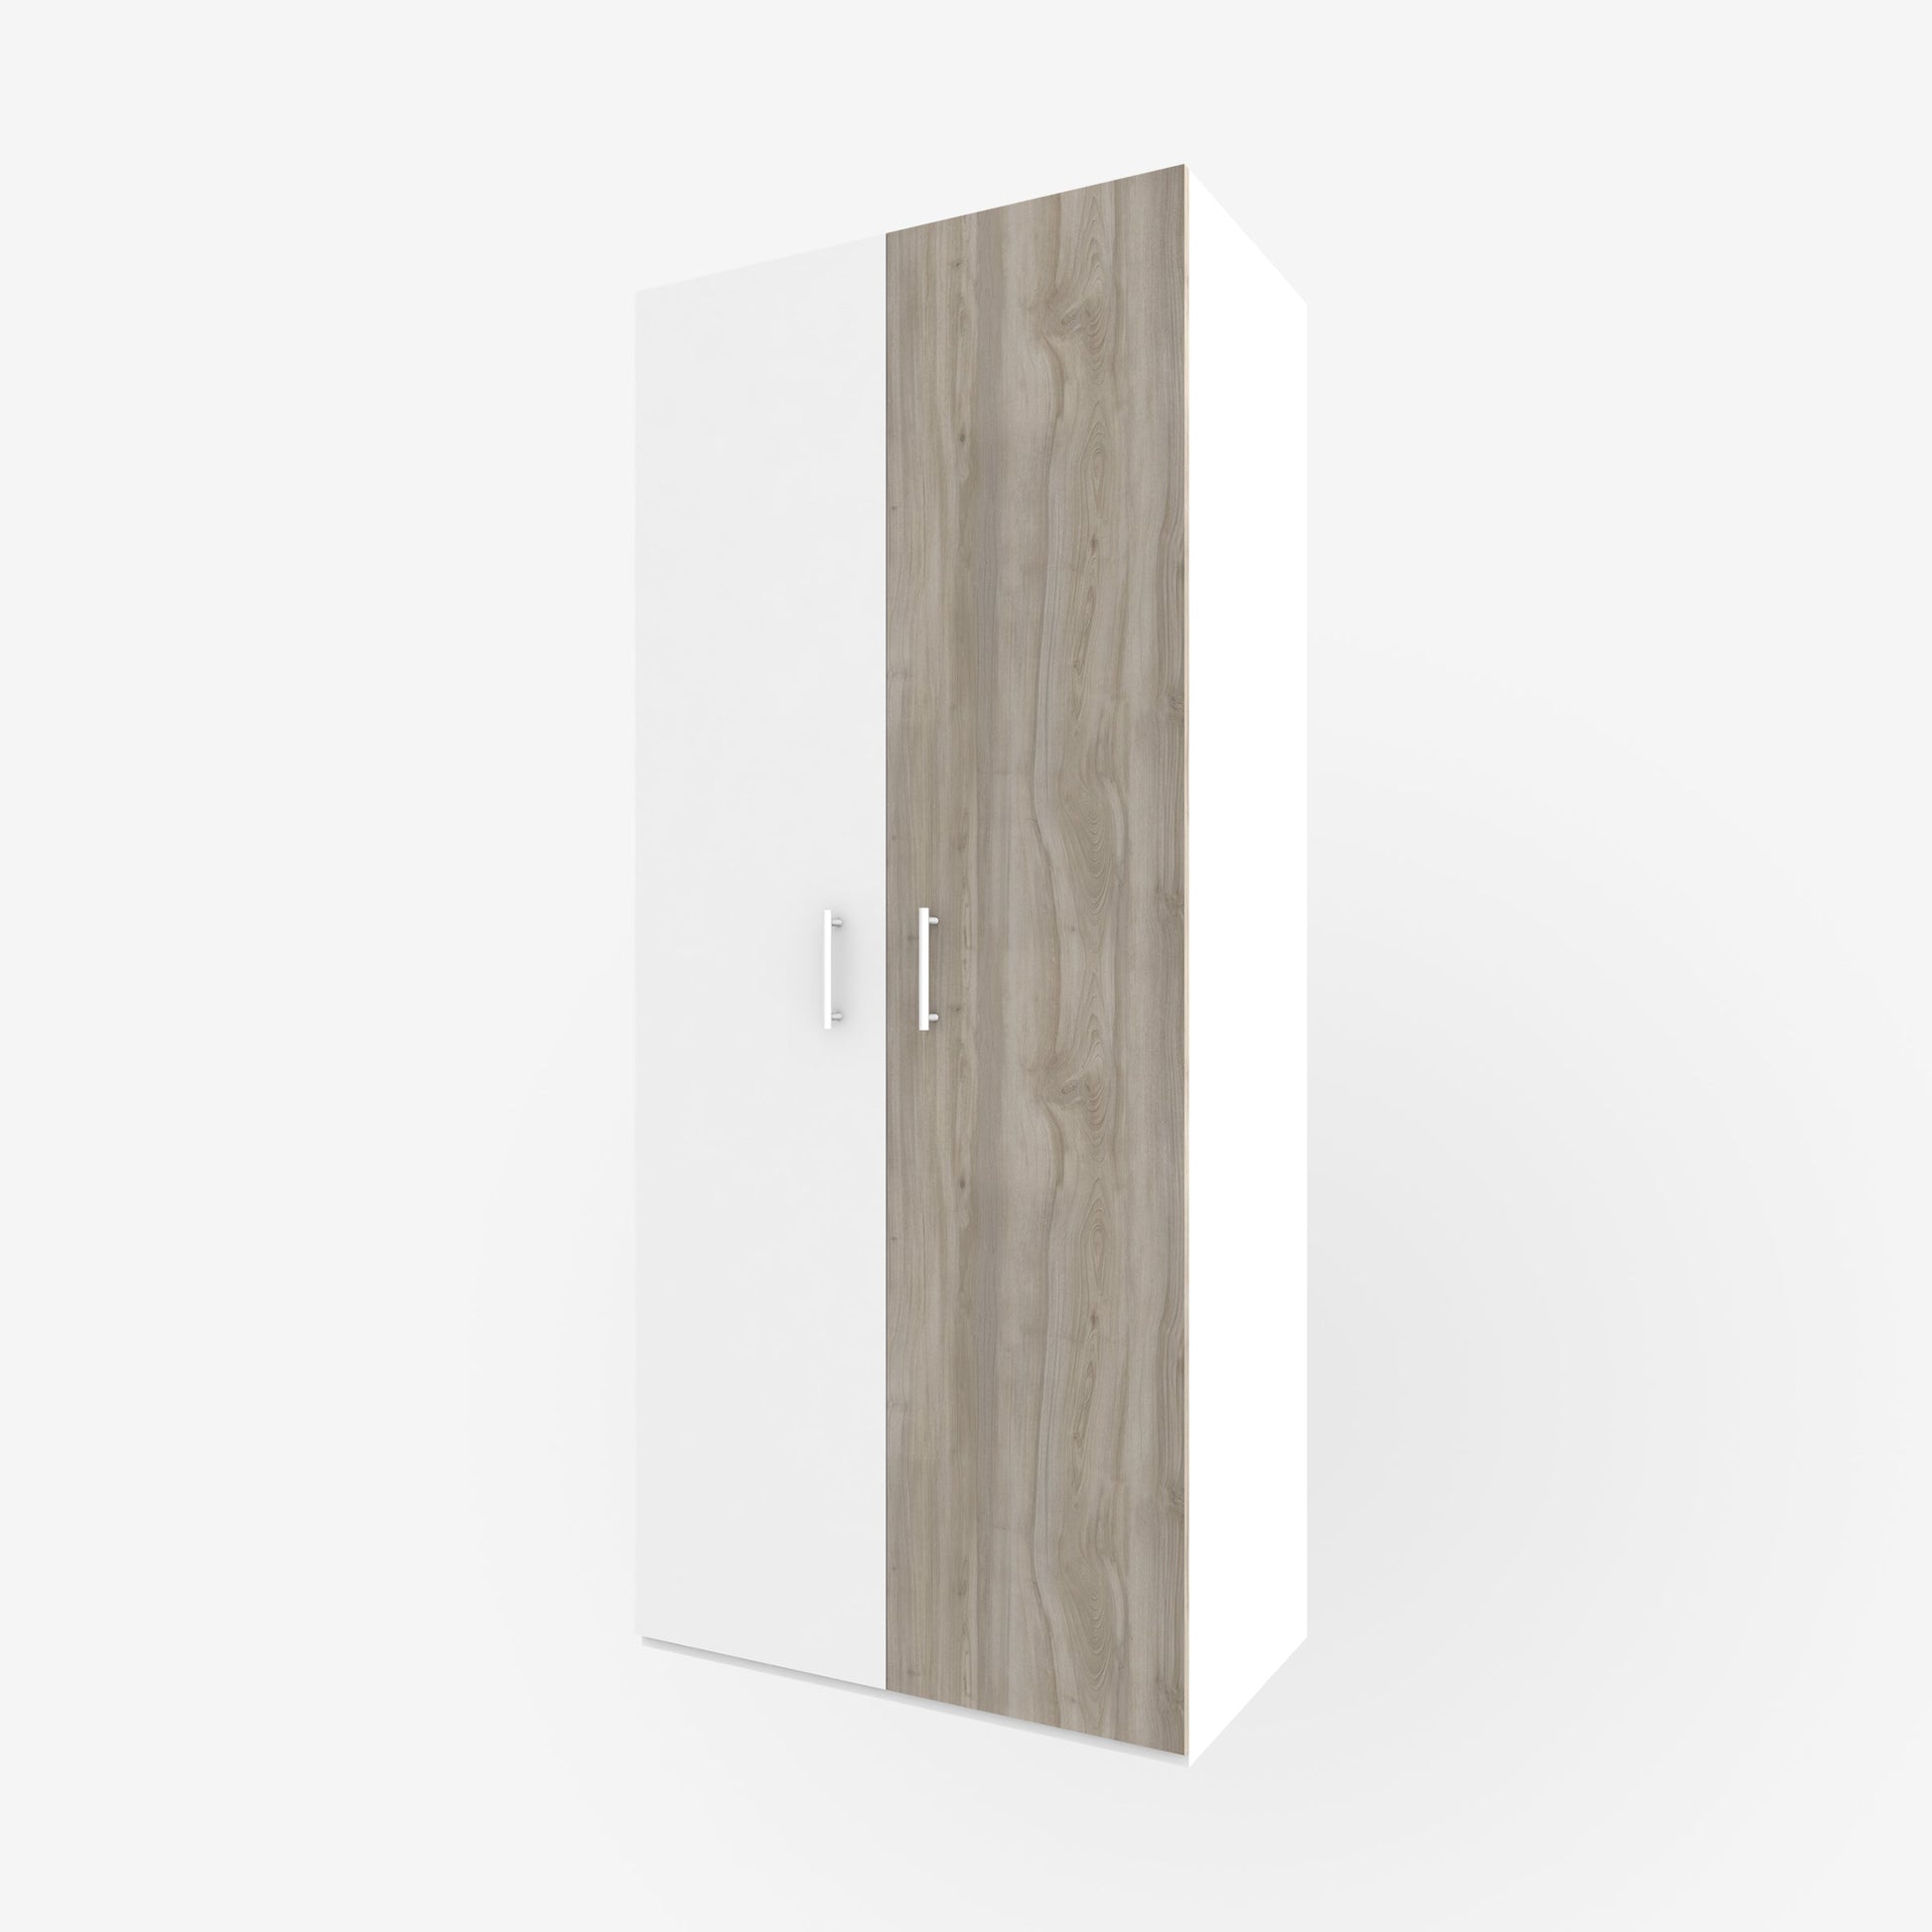 19.5" x 93" light wood tone silverwood slab door for Ikea or Swedeboxx pax closet cabinet